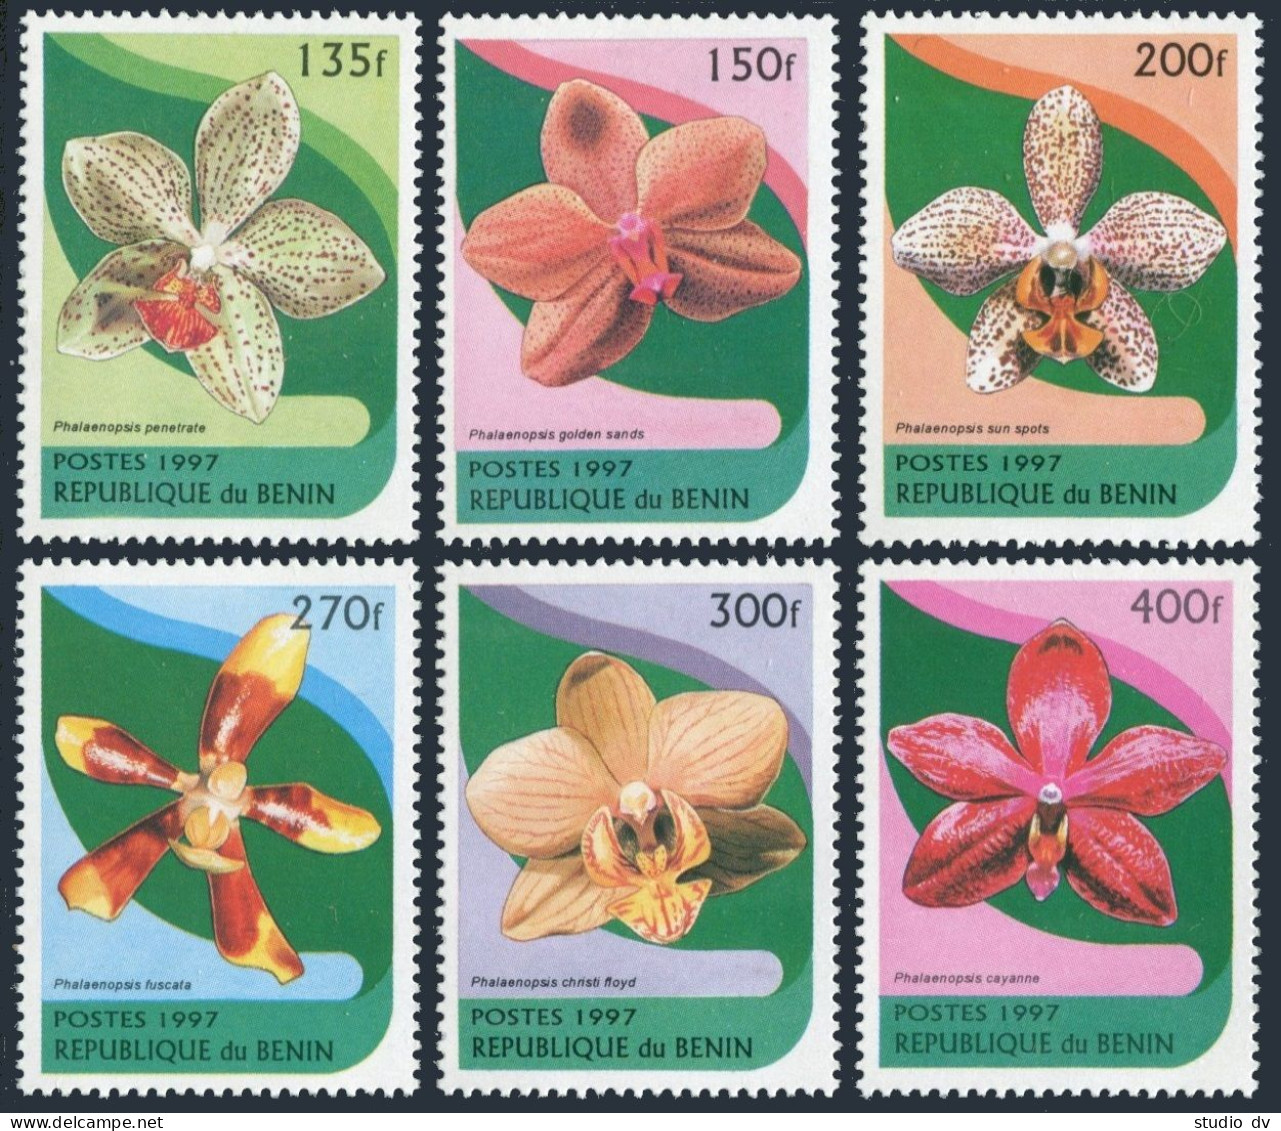 Benin 973-978, MNH. Michel 943-948. Orchids 1997. - Benin - Dahomey (1960-...)